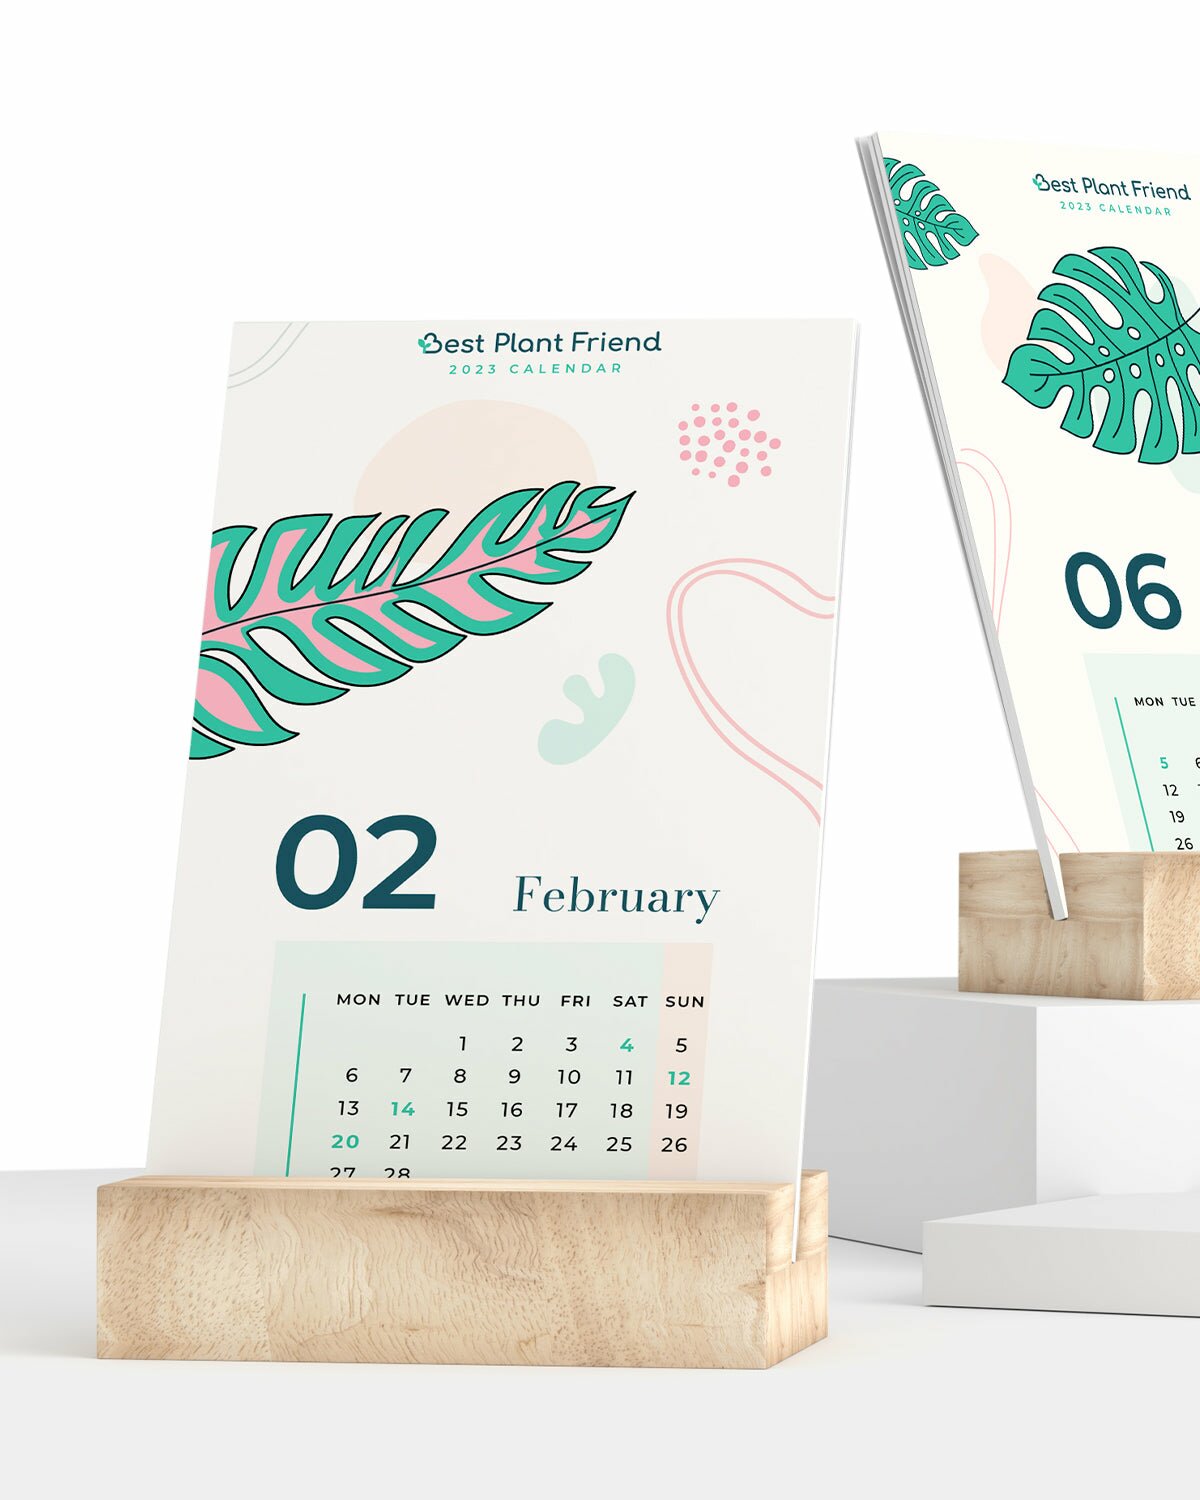 2023 calendar, free 2023 calendar, printable calendar for 2023, calendar in houseplant theme, best gift for plant lovers, new year 2023 gift